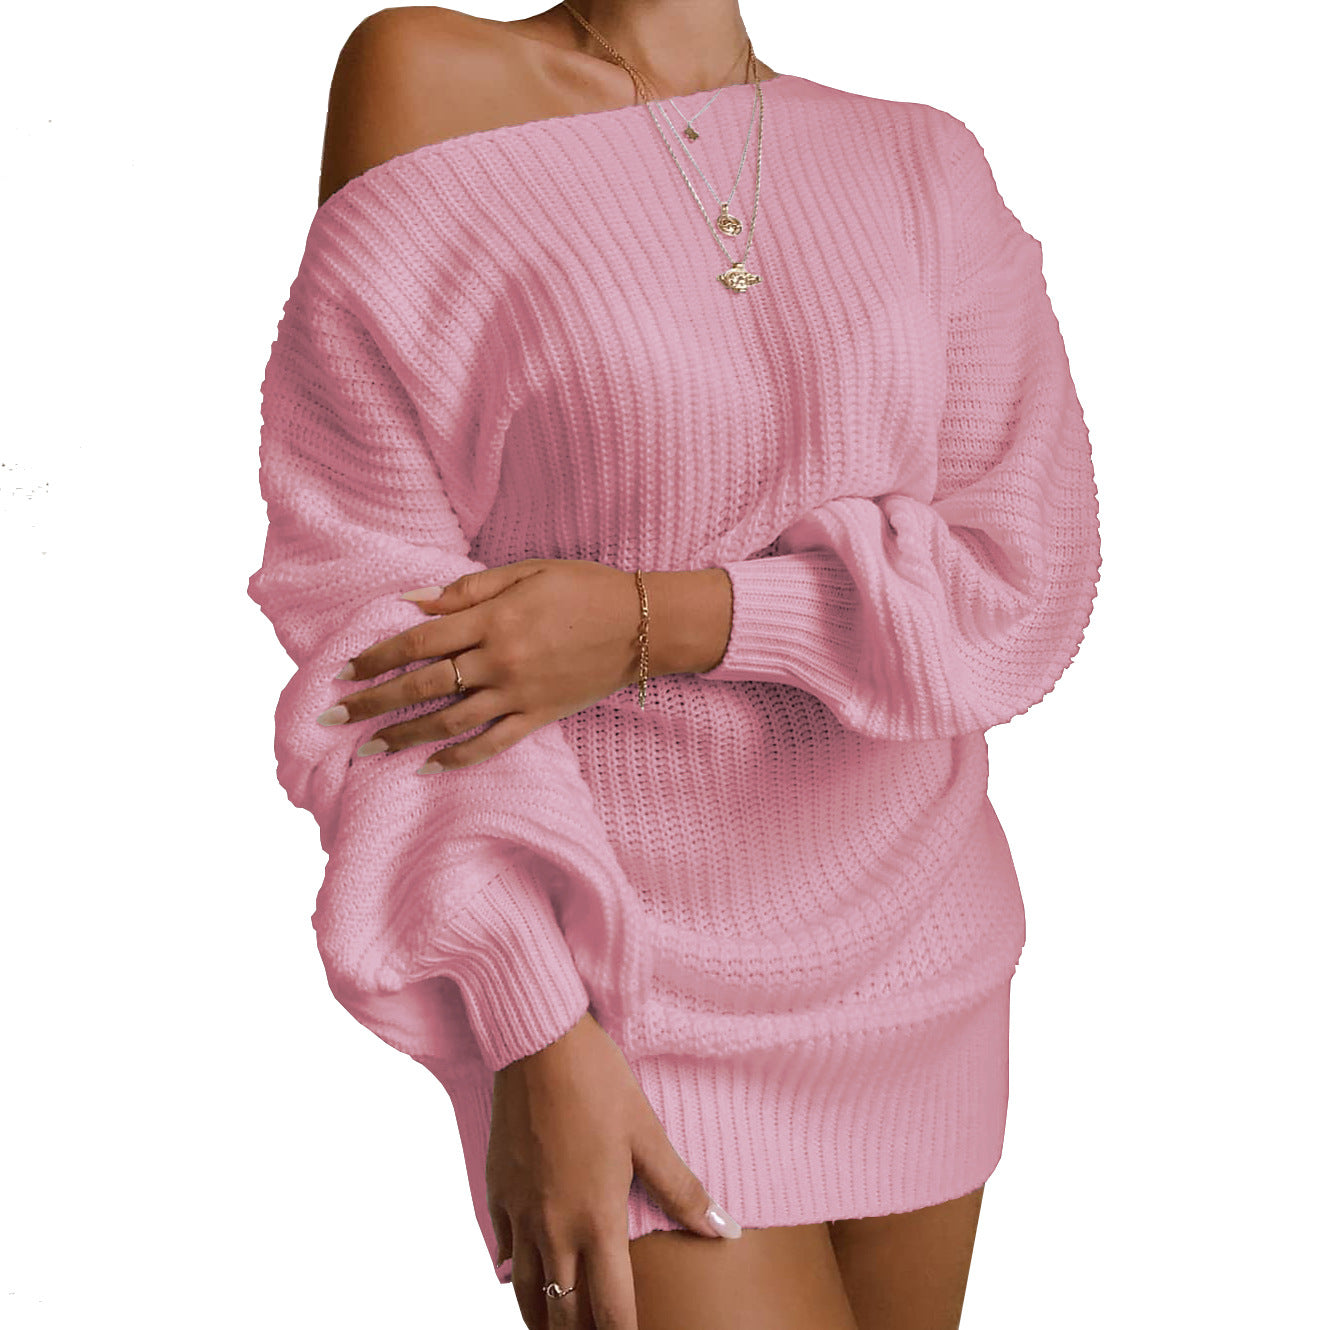 Strapless lantern sleeve knitted sweater dress